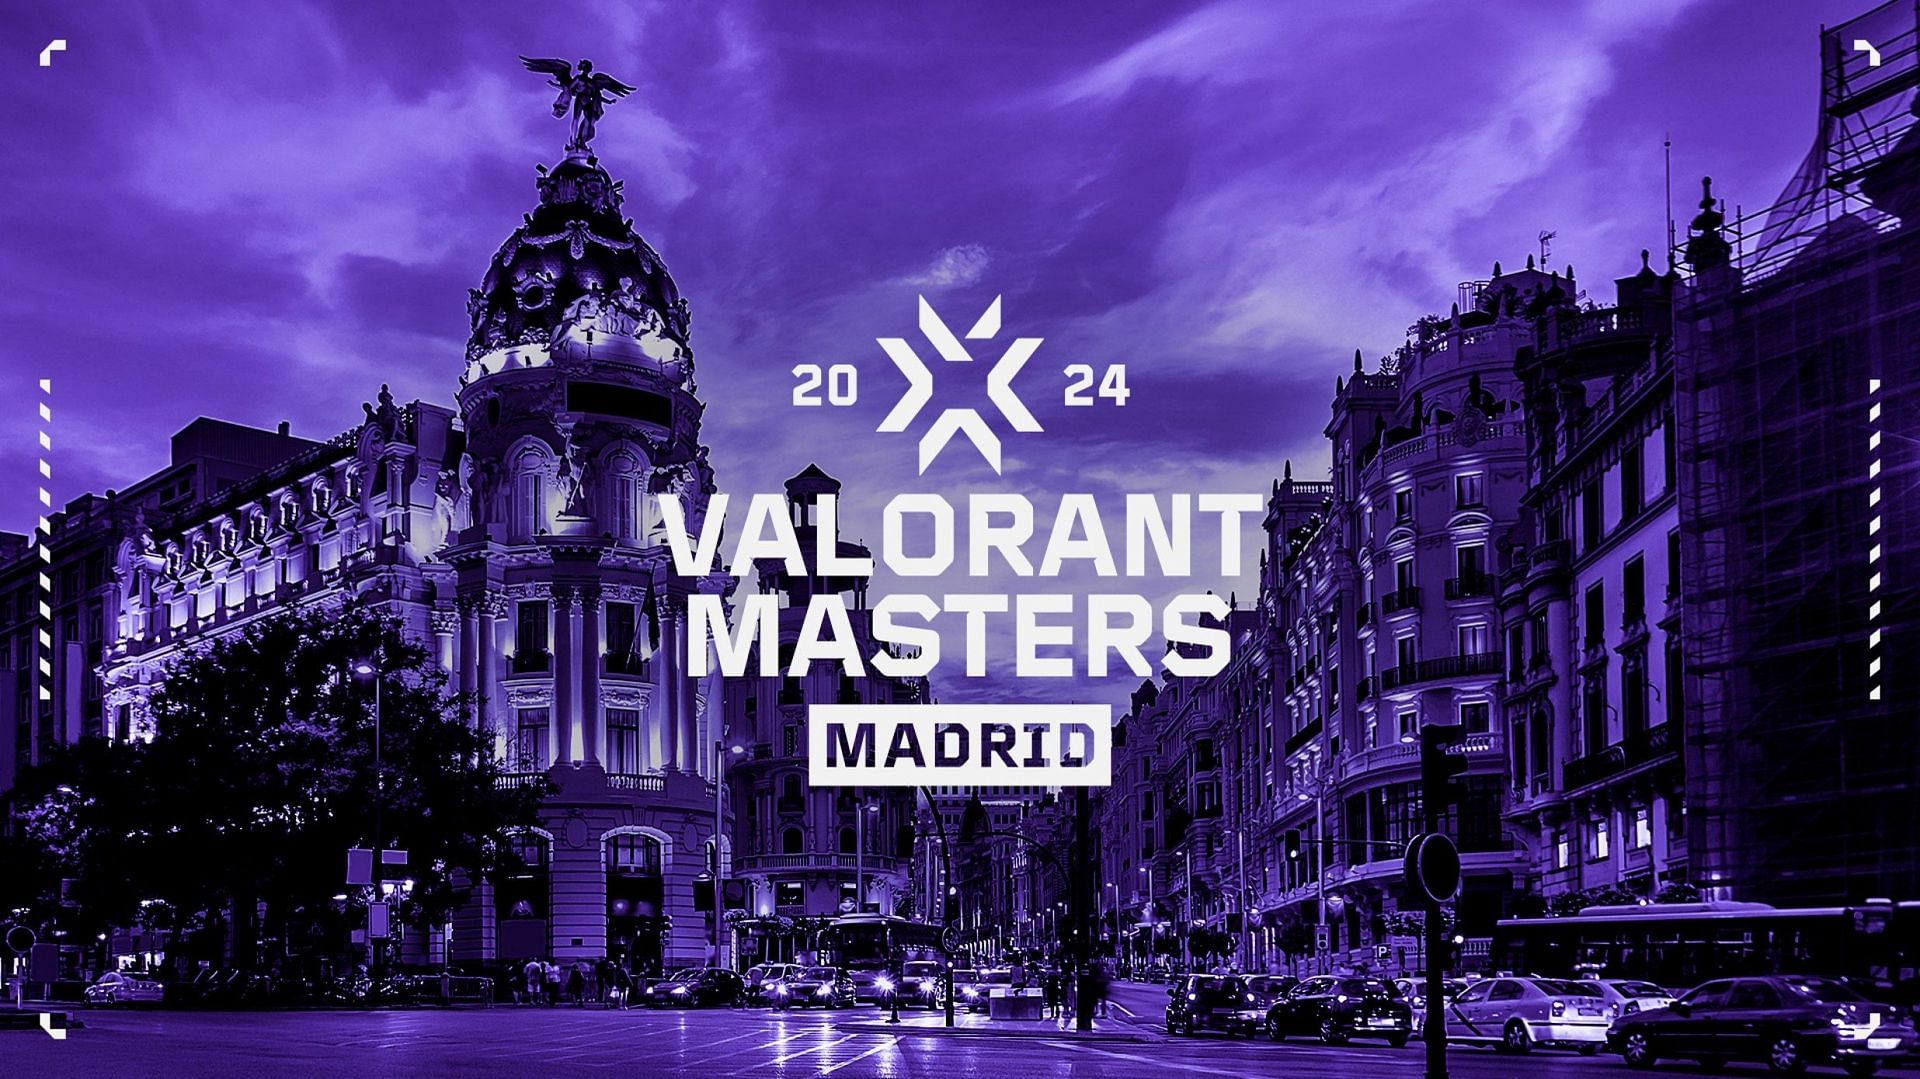 VCT Masters Madrid установил новый рекорд просмотров   